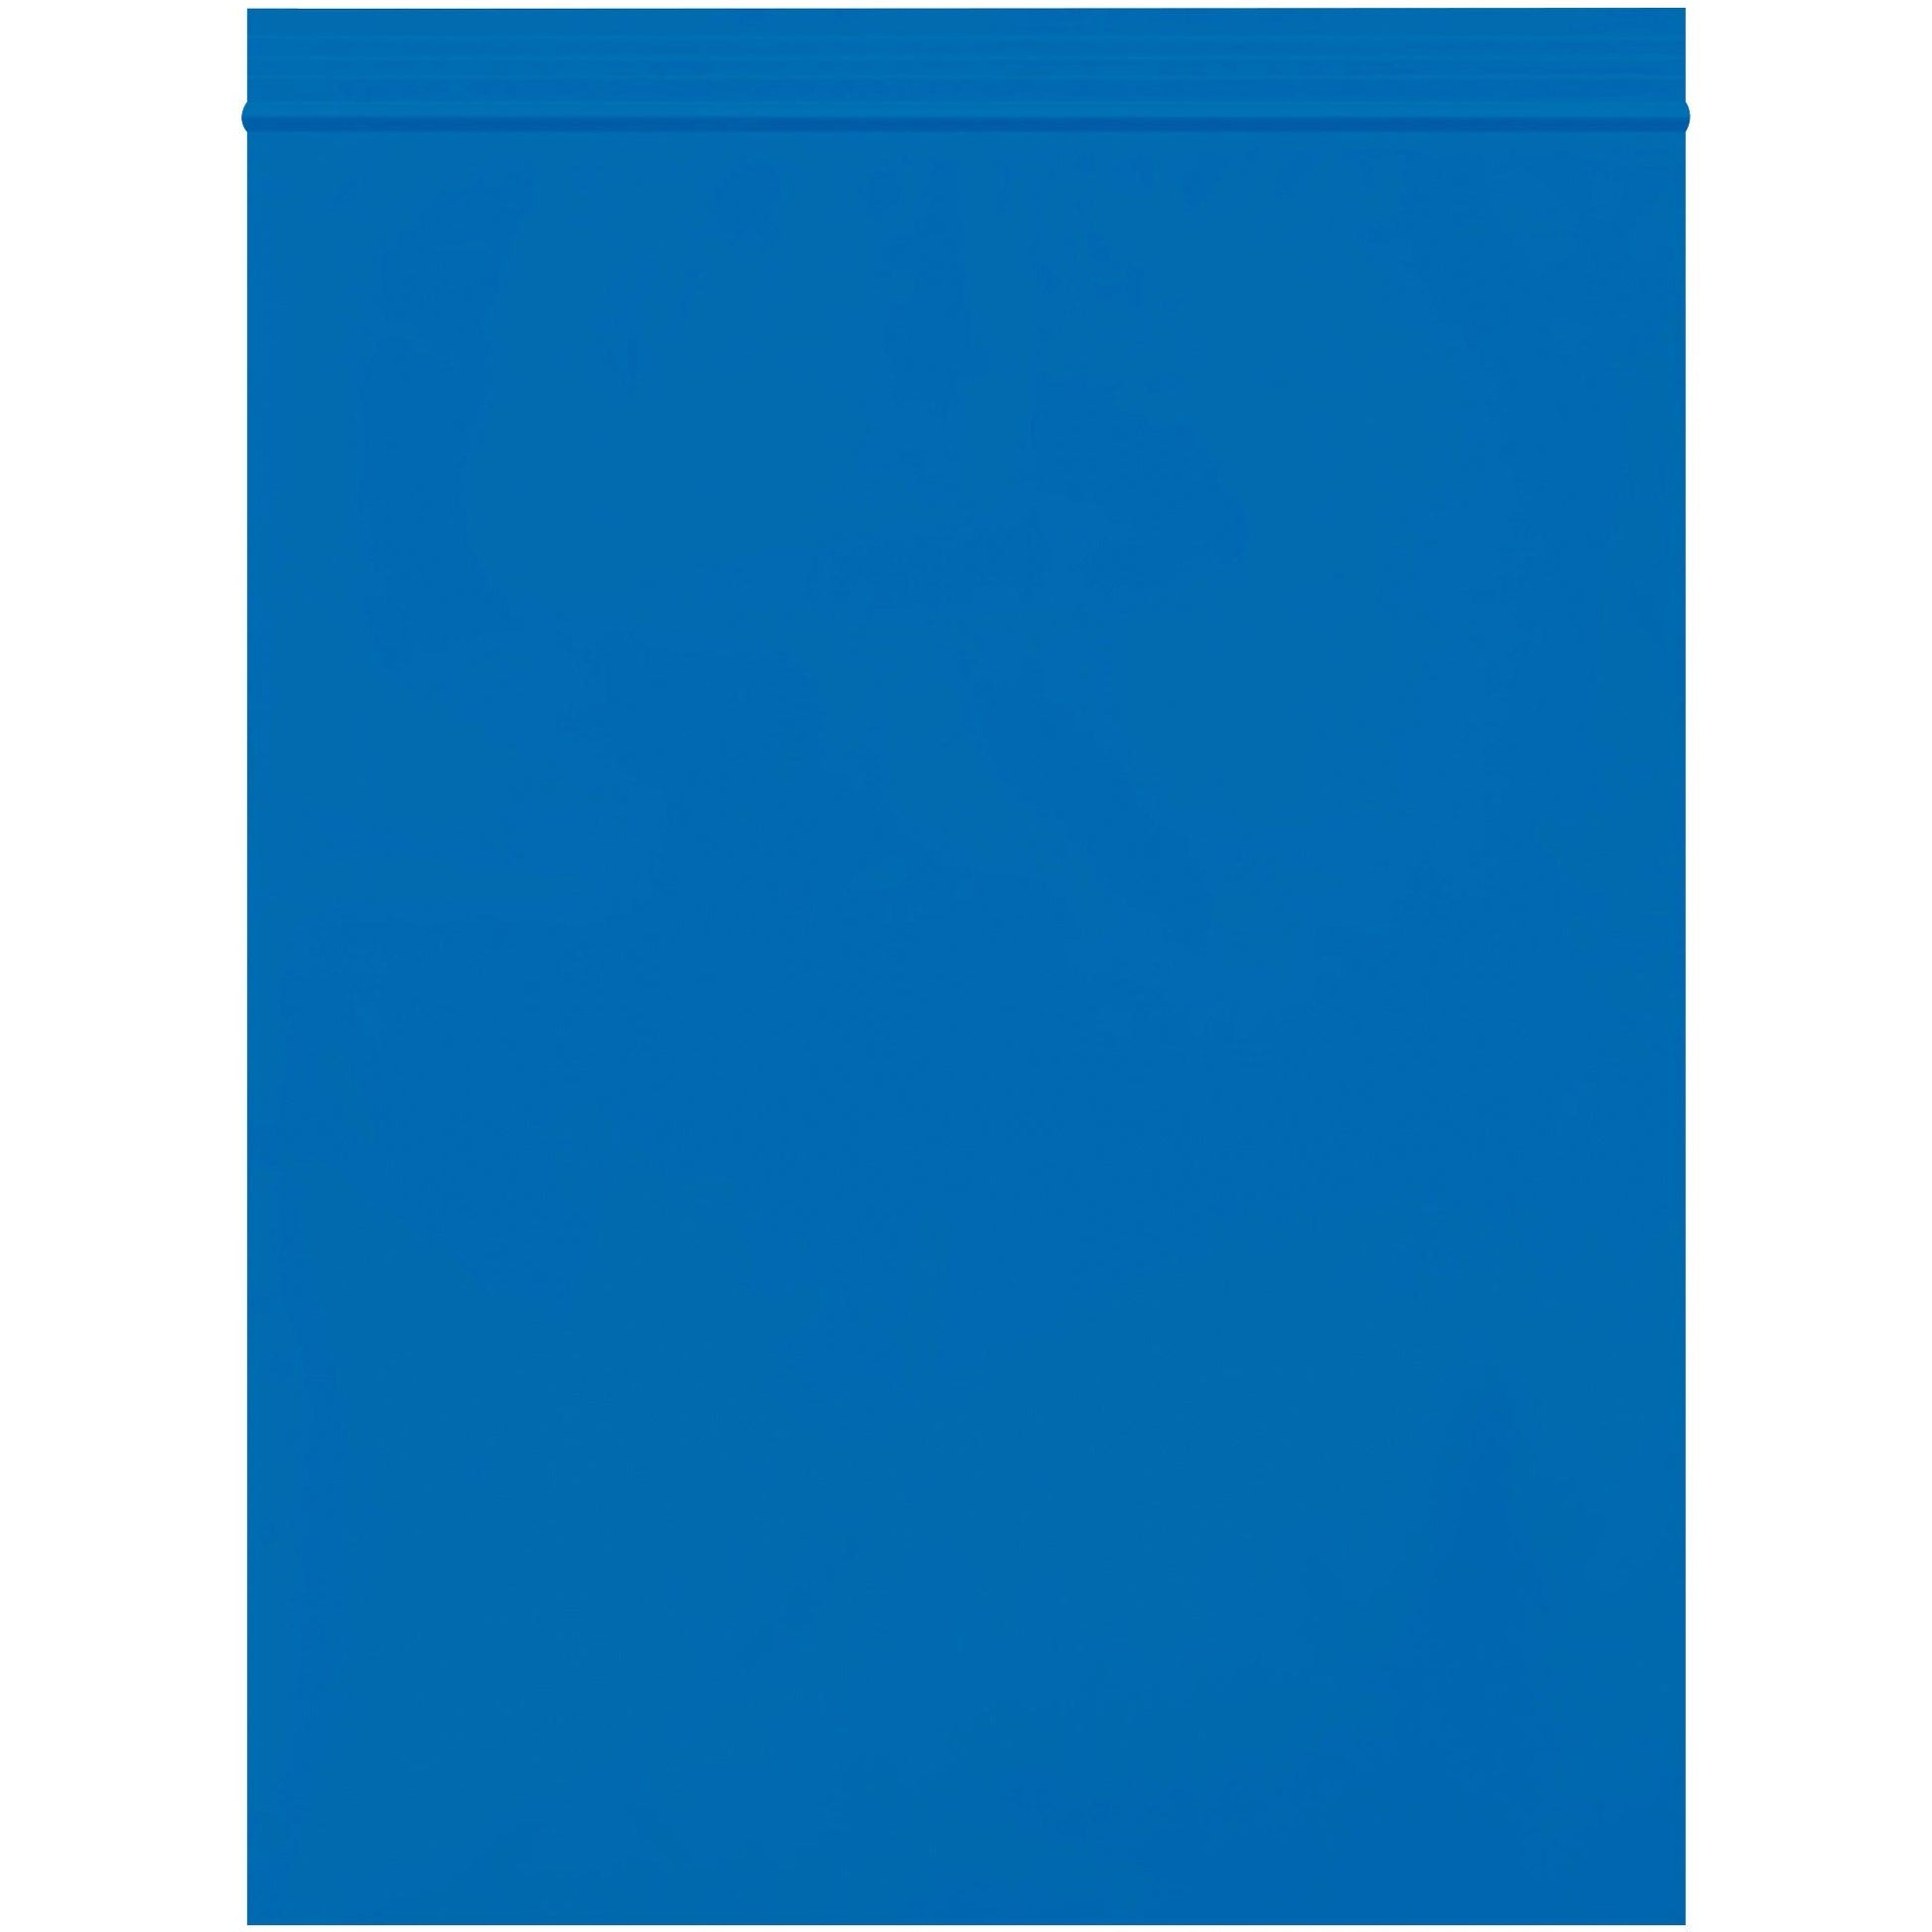 8 x 10" - 2 Mil Blue Reclosable Poly Bags - PB3635BL